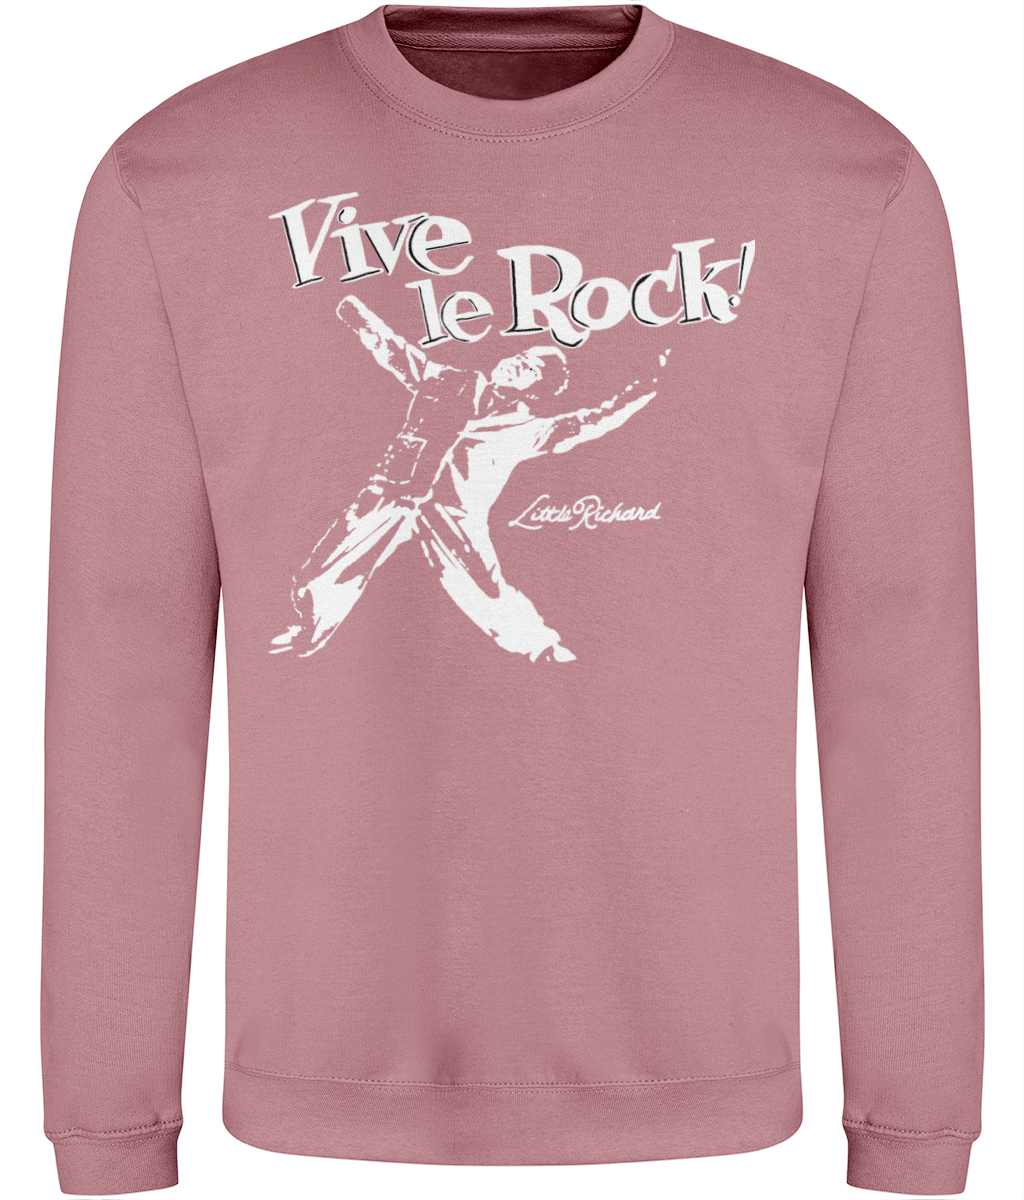 Richard-Sweatshirt-1972 – GAS Wembley Roll Shir T n Rock Shirts T Little festival-GAS